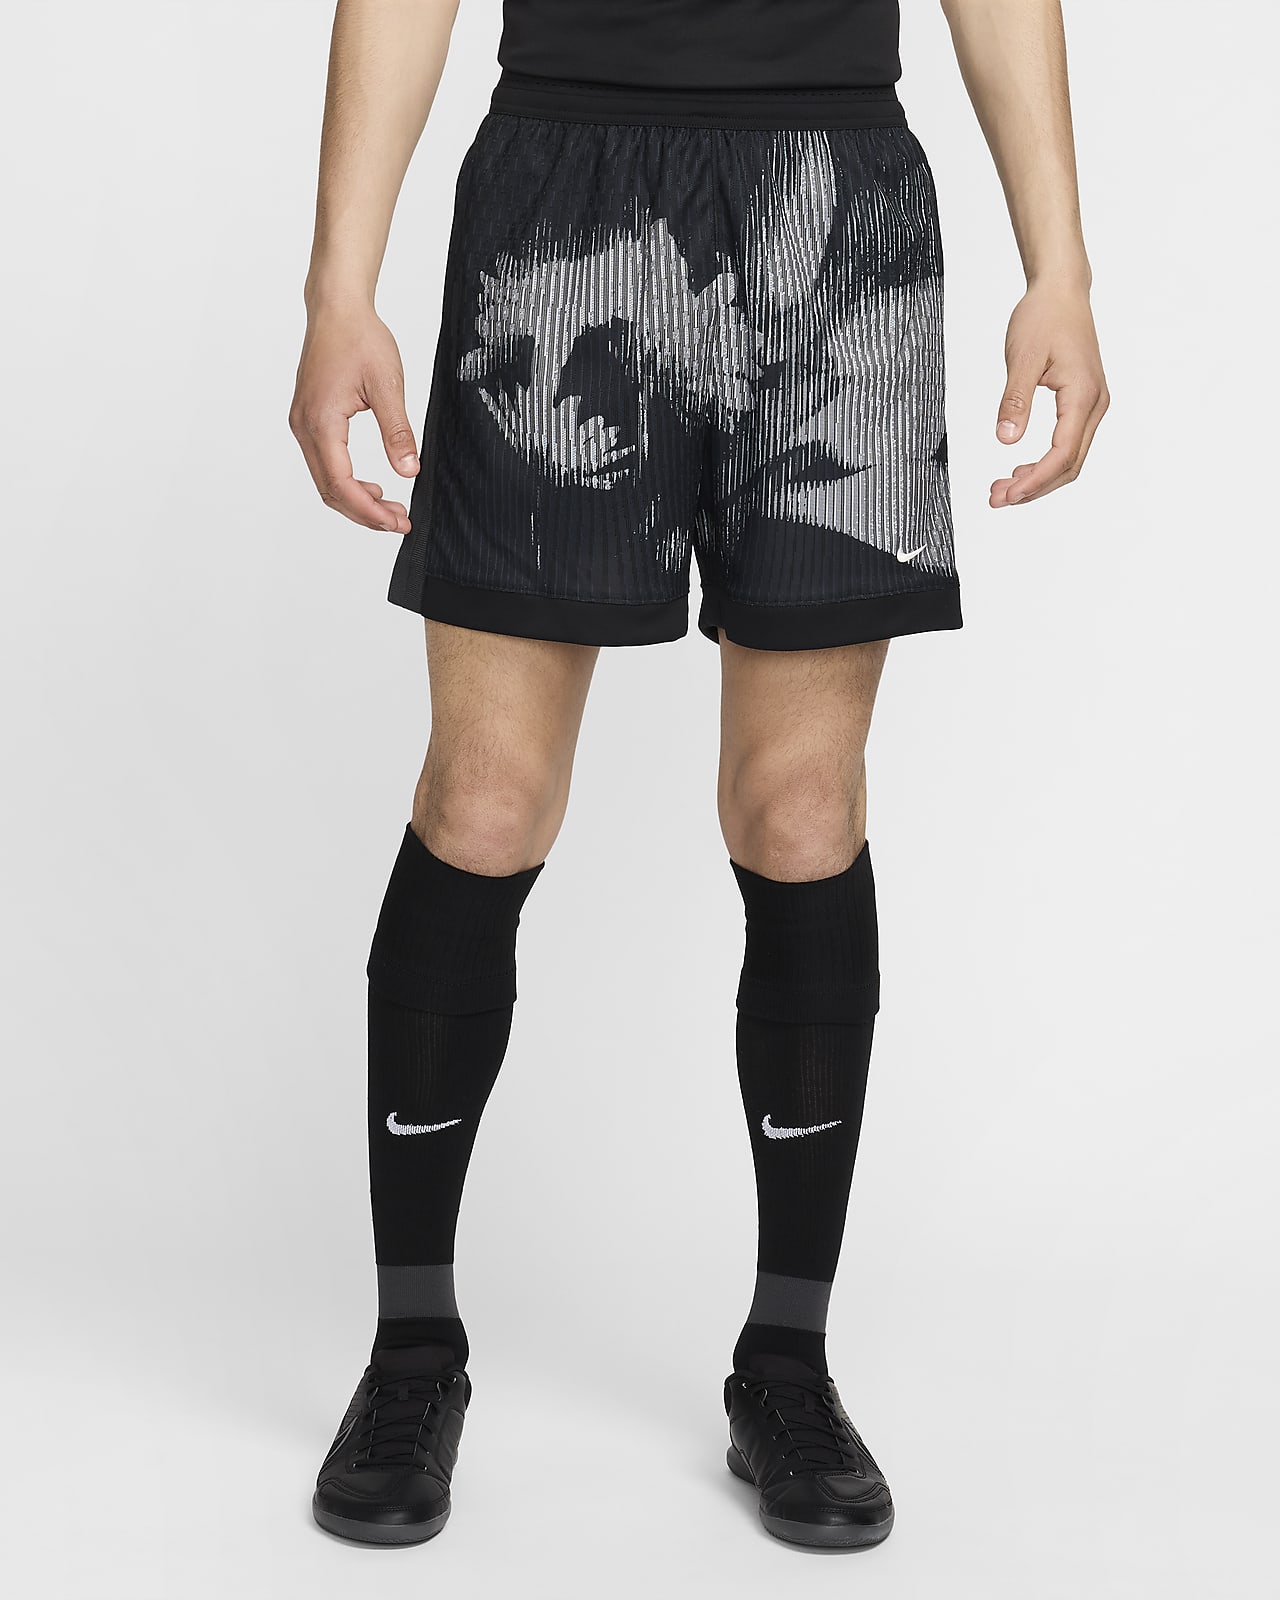 Nike Culture of Football Men's 5" Dri-FIT ADV Soccer Shorts